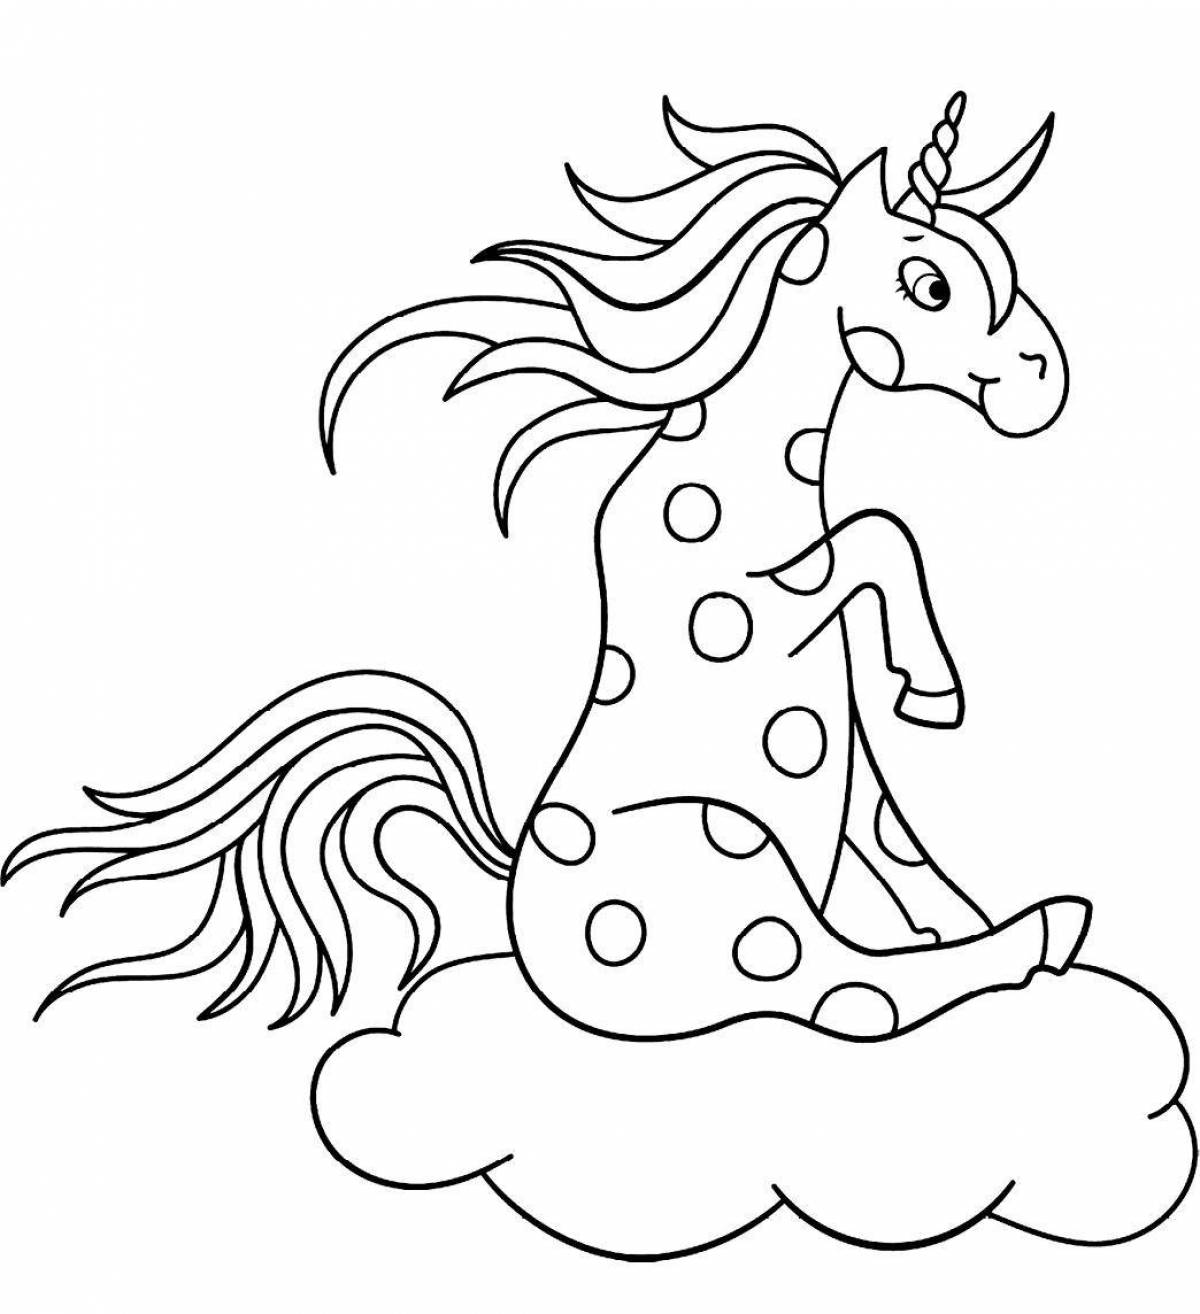 Fancy unicorn coloring pages